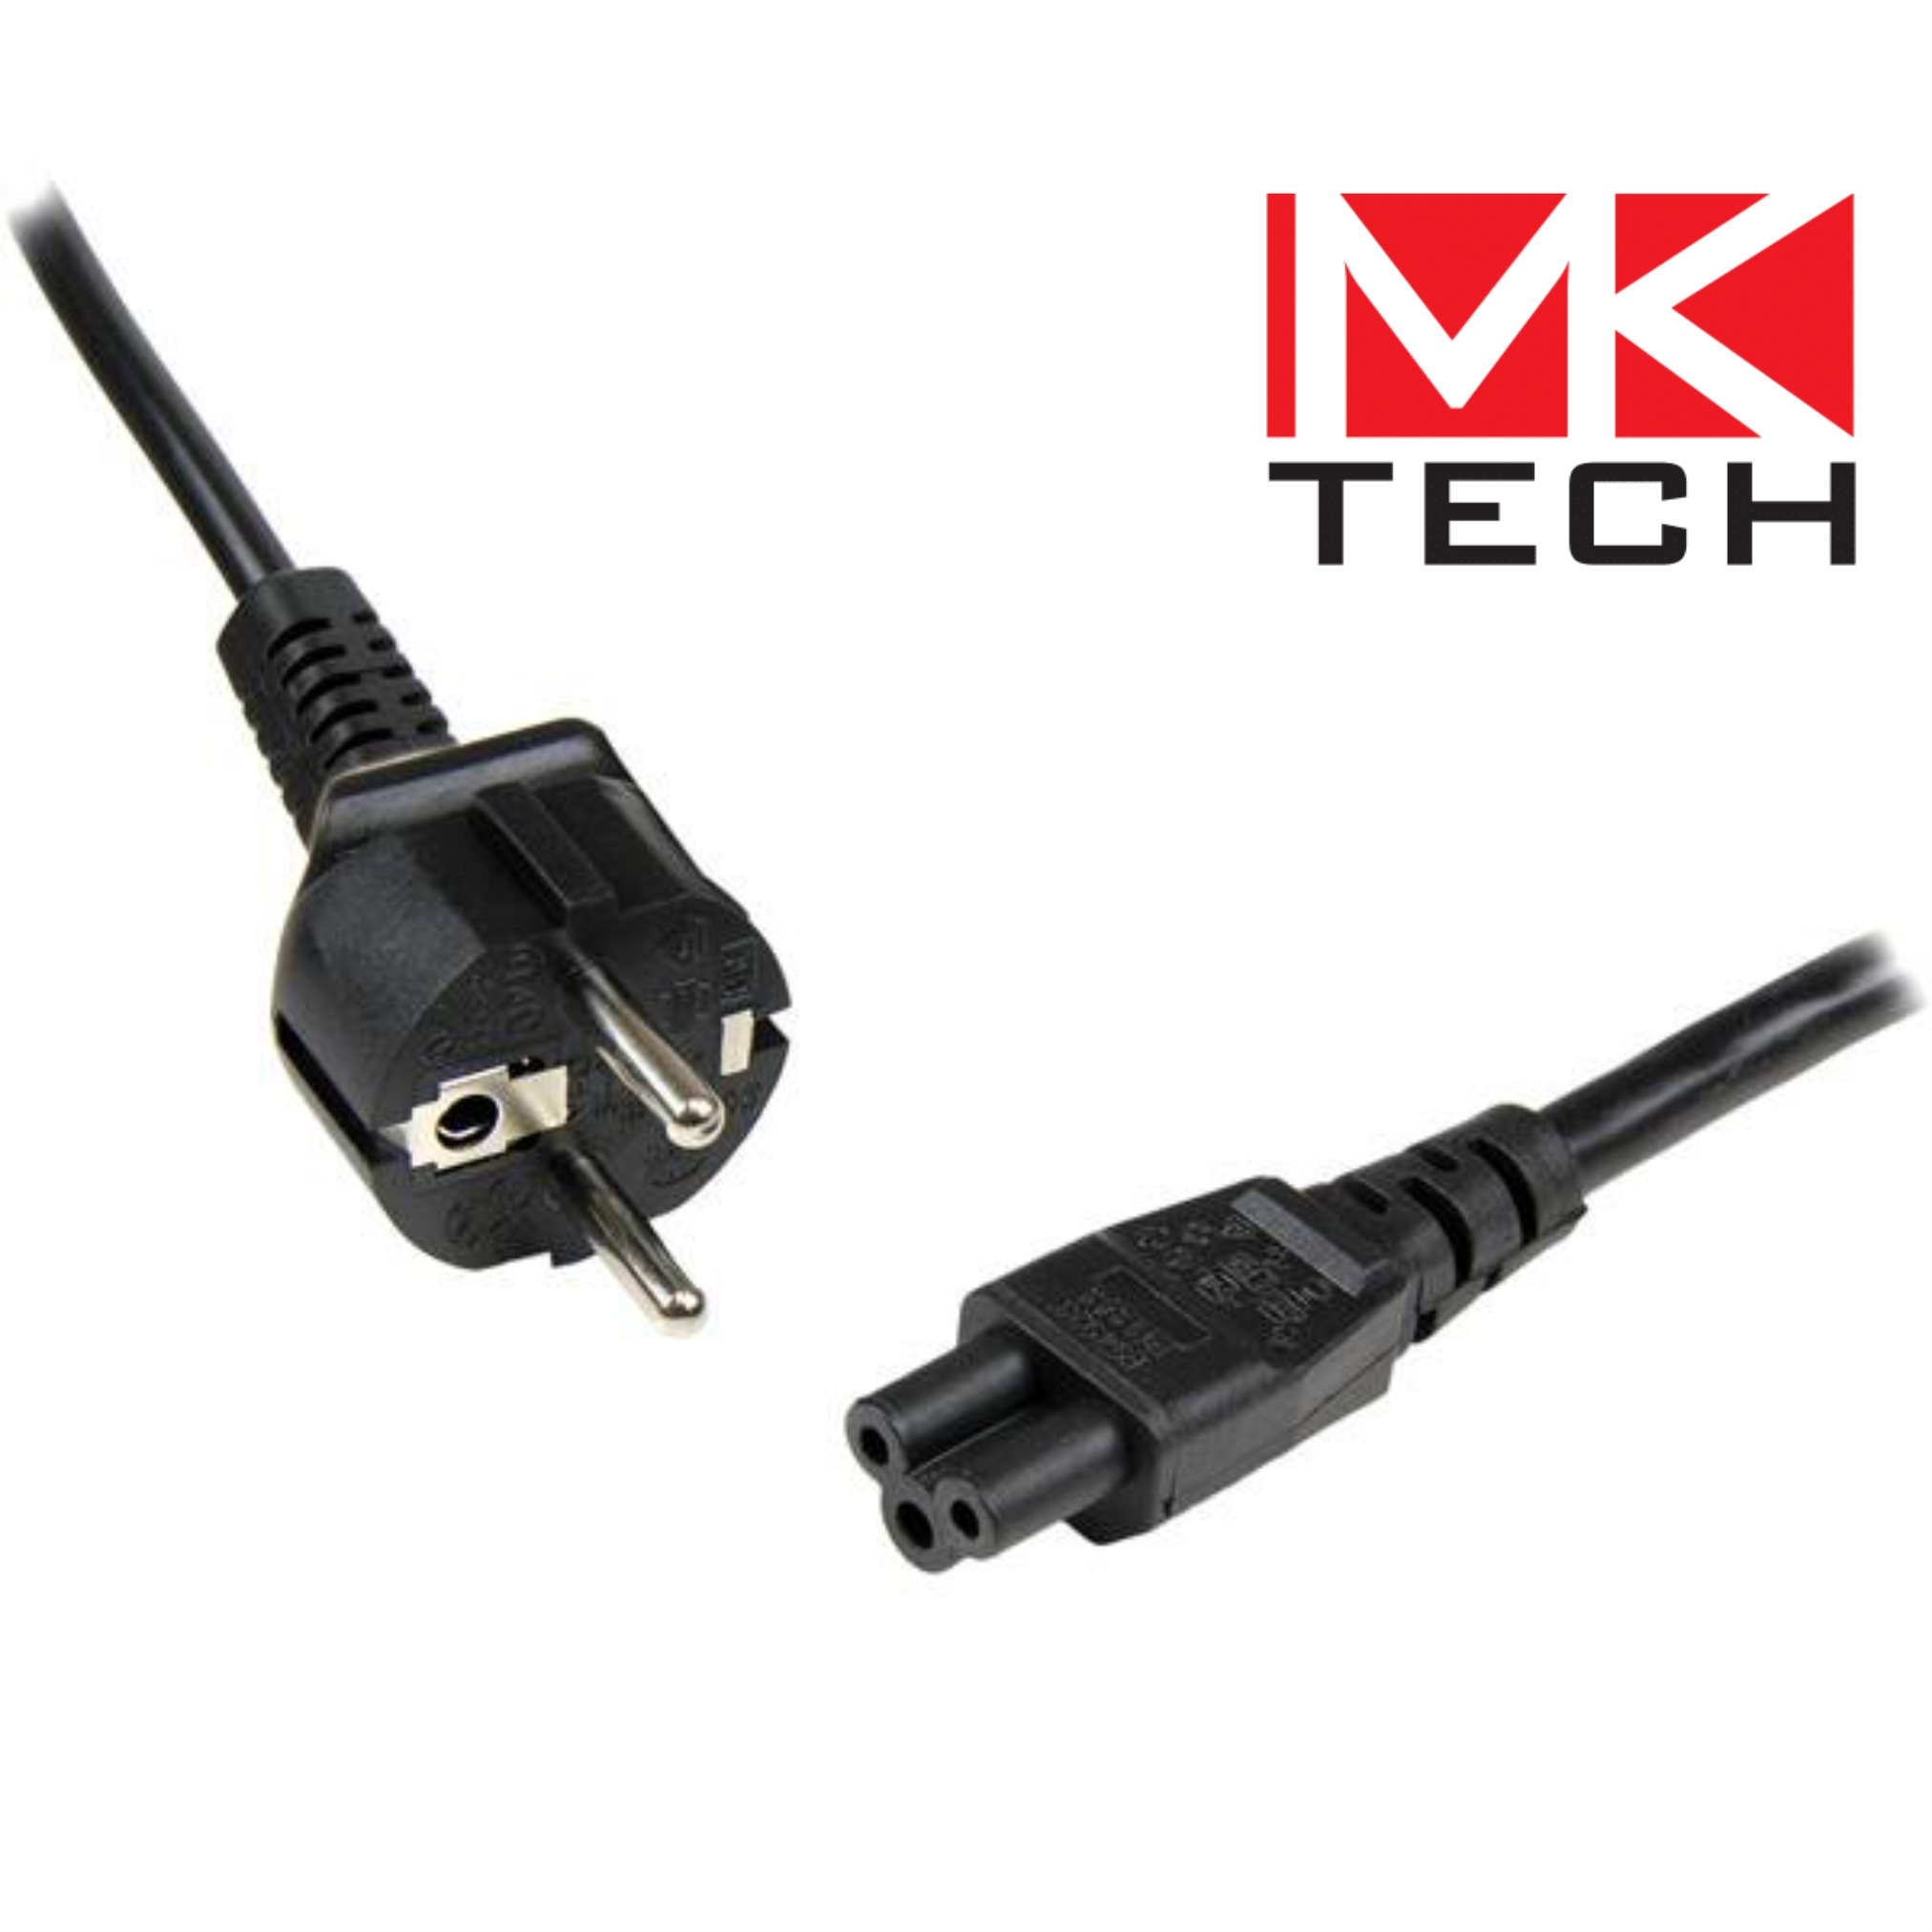 Захранващ кабел за лaптоп 3 pin 1.5m  MKTECH